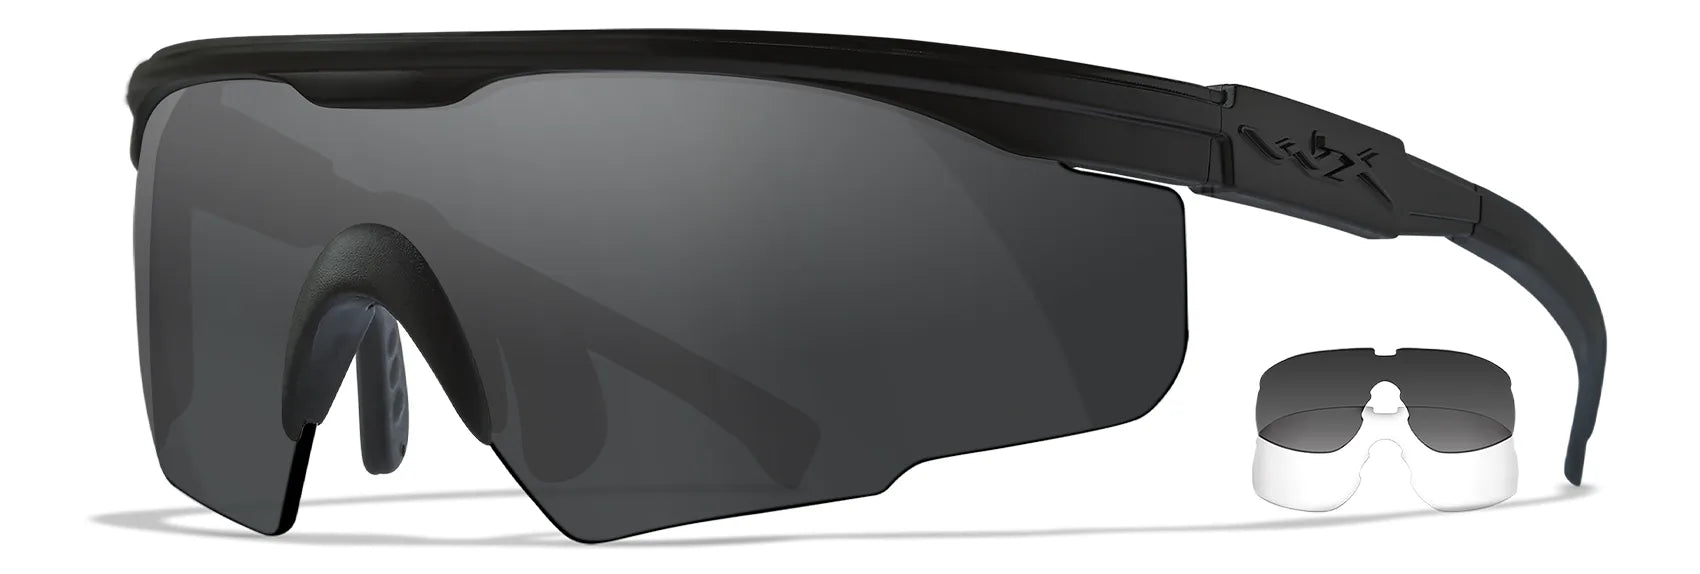 Wiley X PT-1 Safety Glasses Matte Black / Clear, Smoke Grey